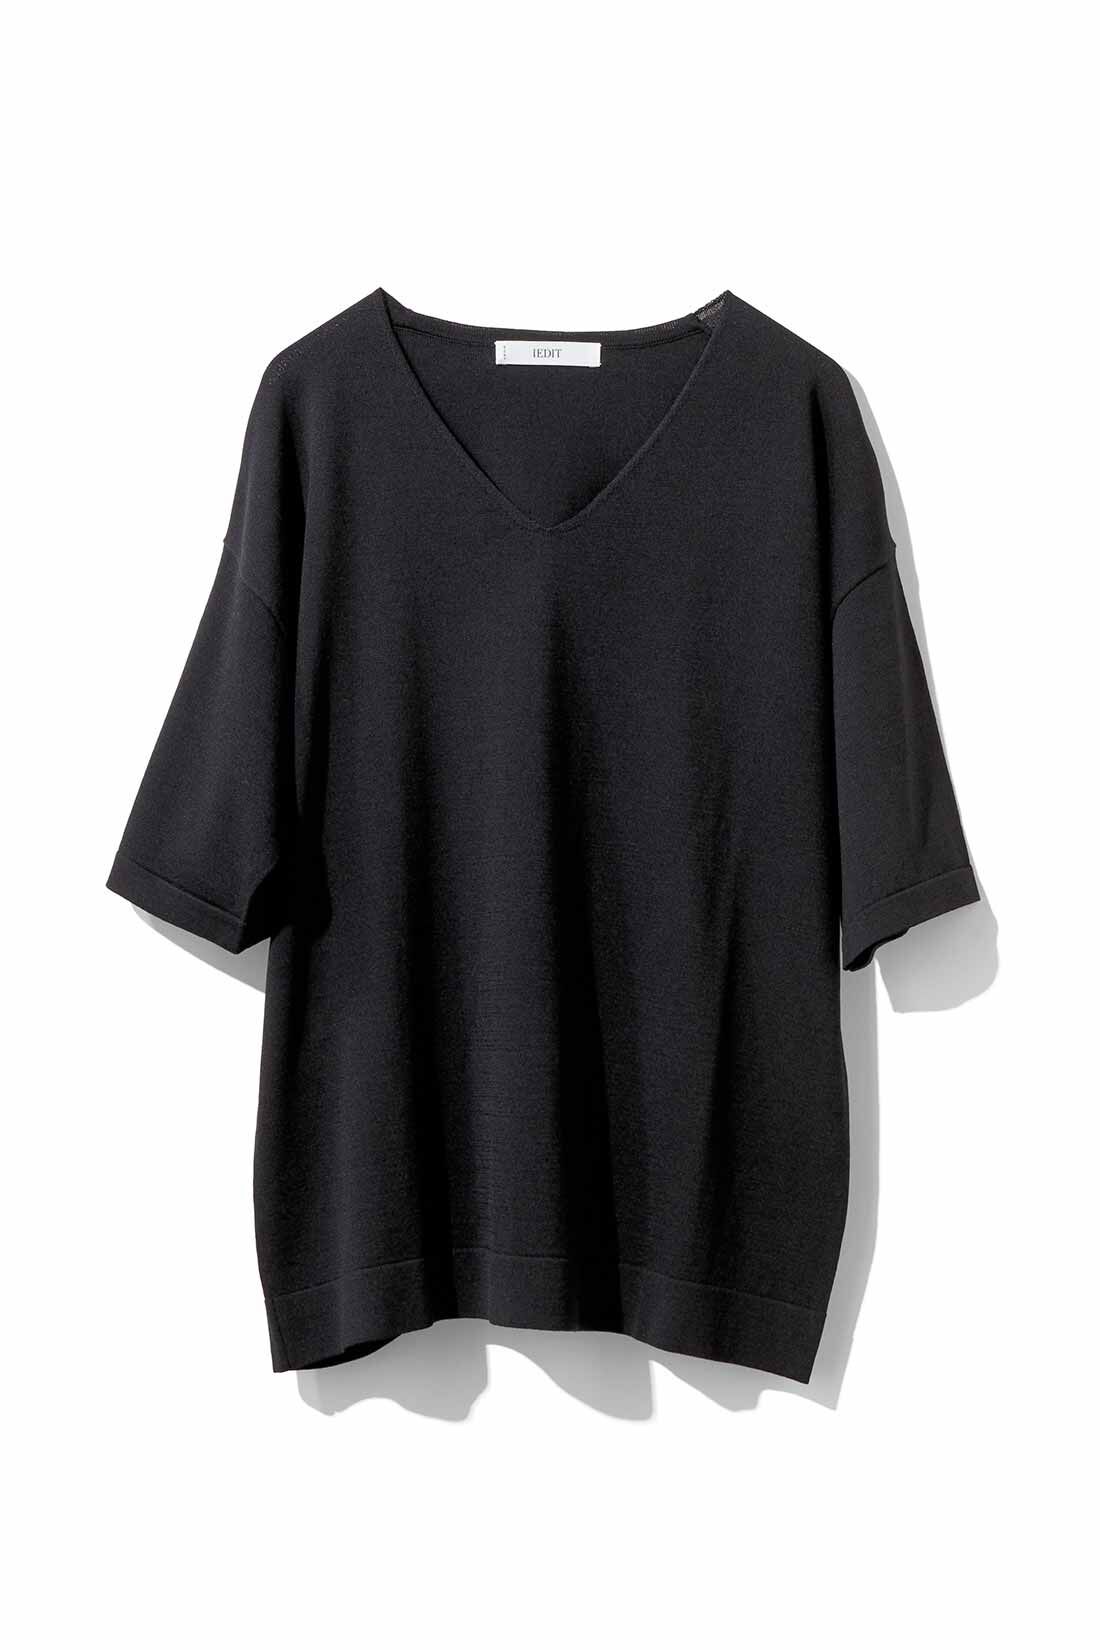 Real Stock|IEDIT[イディット]　Tシャツライクに着たい 接触冷感が心地よい シャリ感シンプルニット〈ブラック〉|ブラック